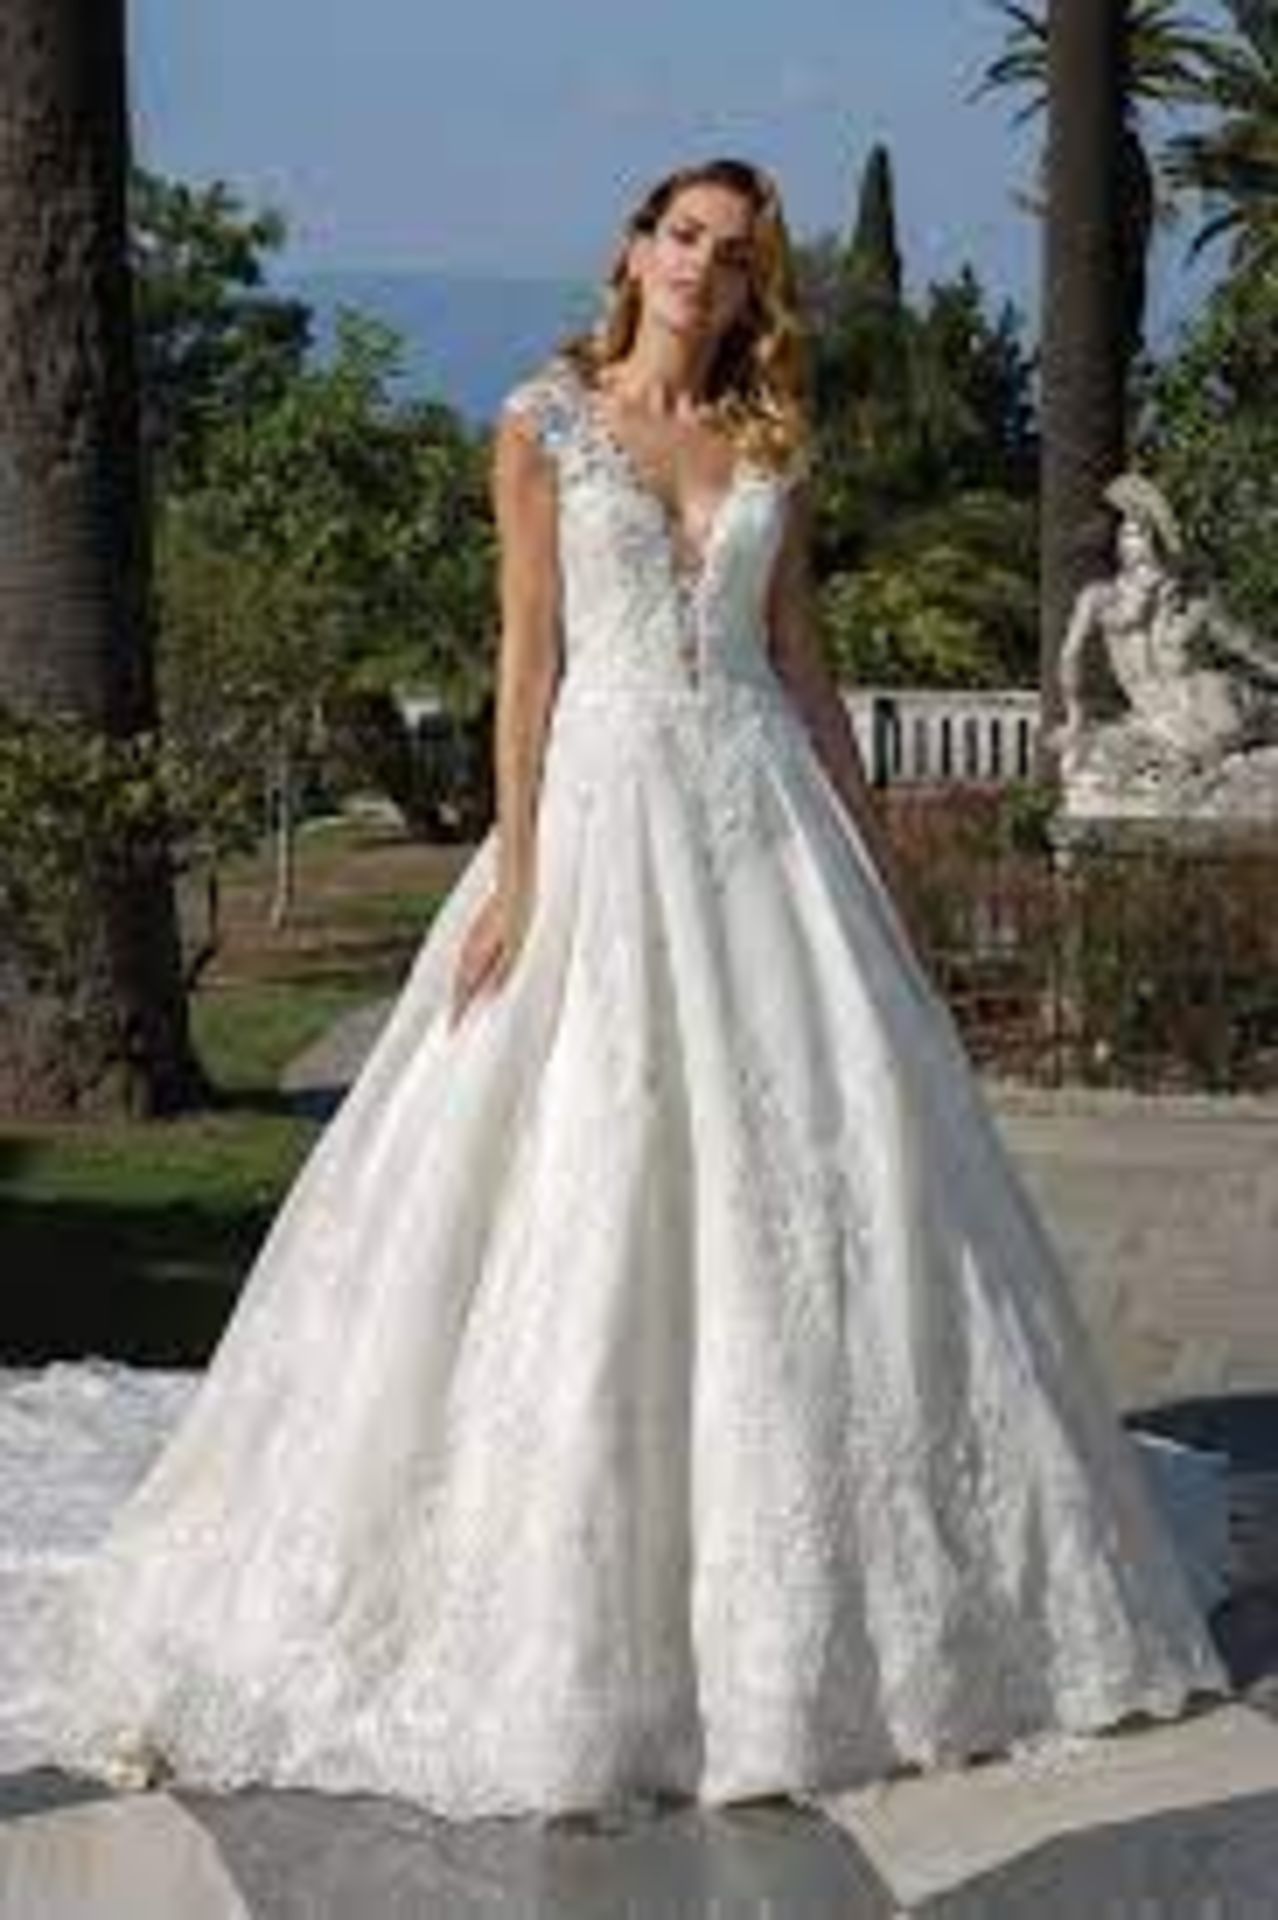 1 x Justin Alexander Designer Organdy Wedding Dress With Plunging Neckline - UK Size 12 - RRP £1,700 - Image 3 of 6